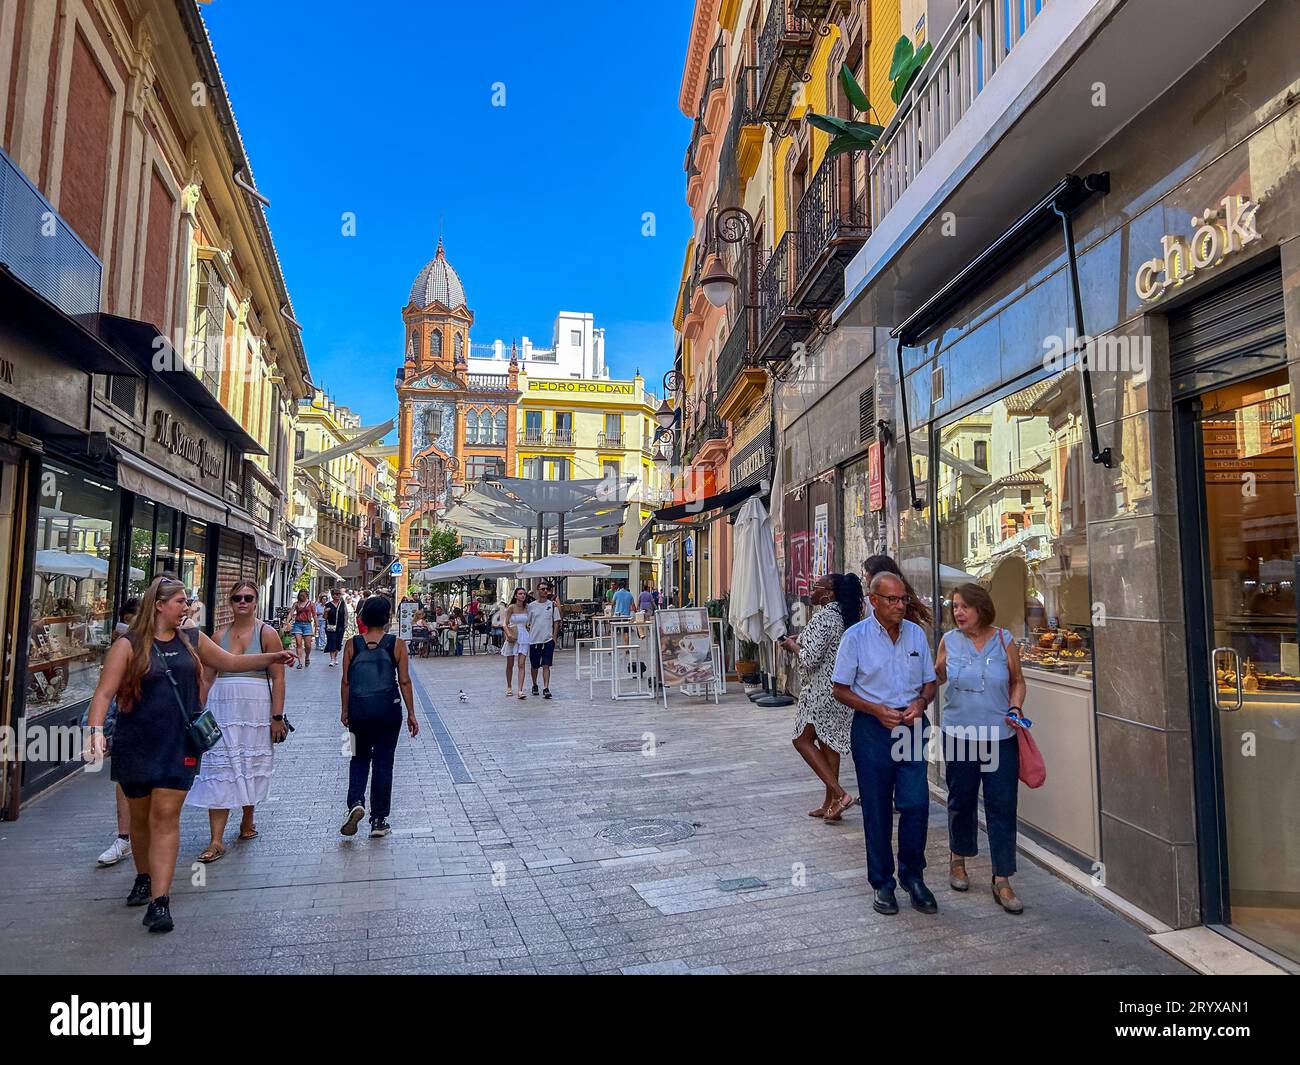 Seville, Spain, Crowd People Walking on Street Scene, in Old Town Center, Stock Photo